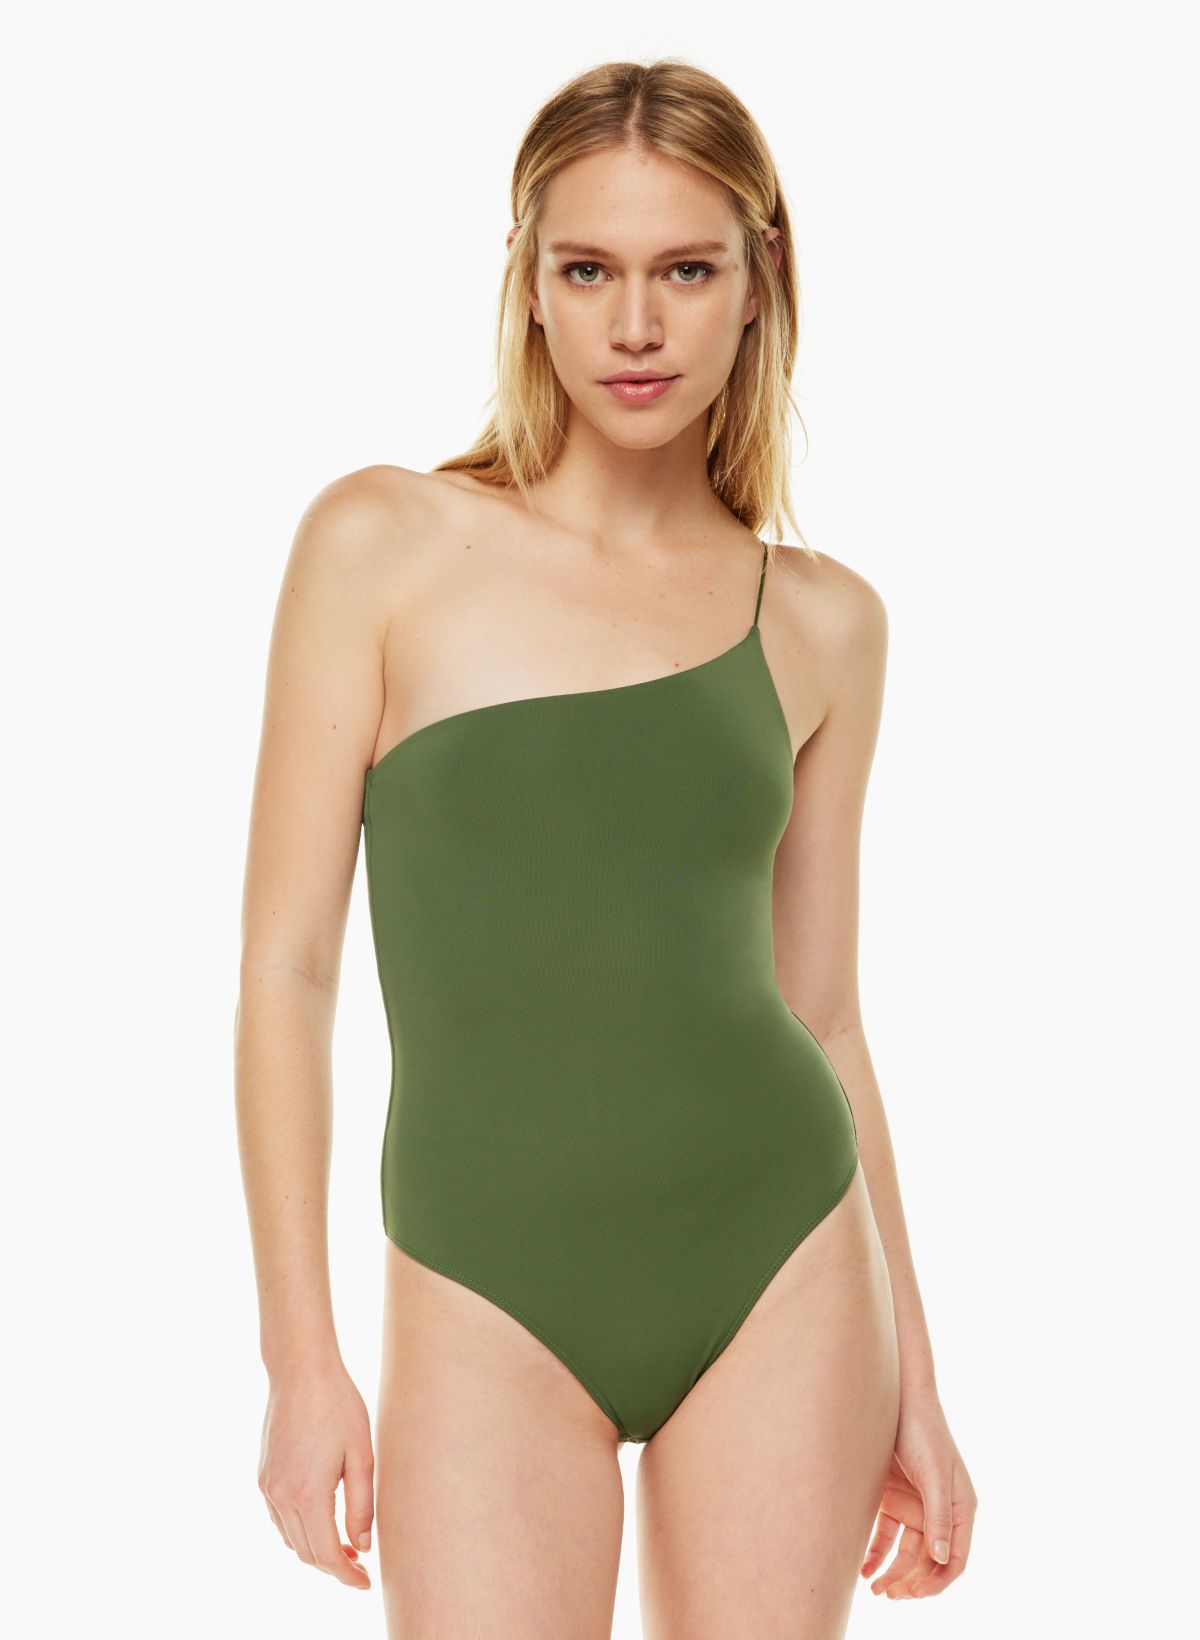 Bras N Things - Sexy Green Bodysuit on Designer Wardrobe